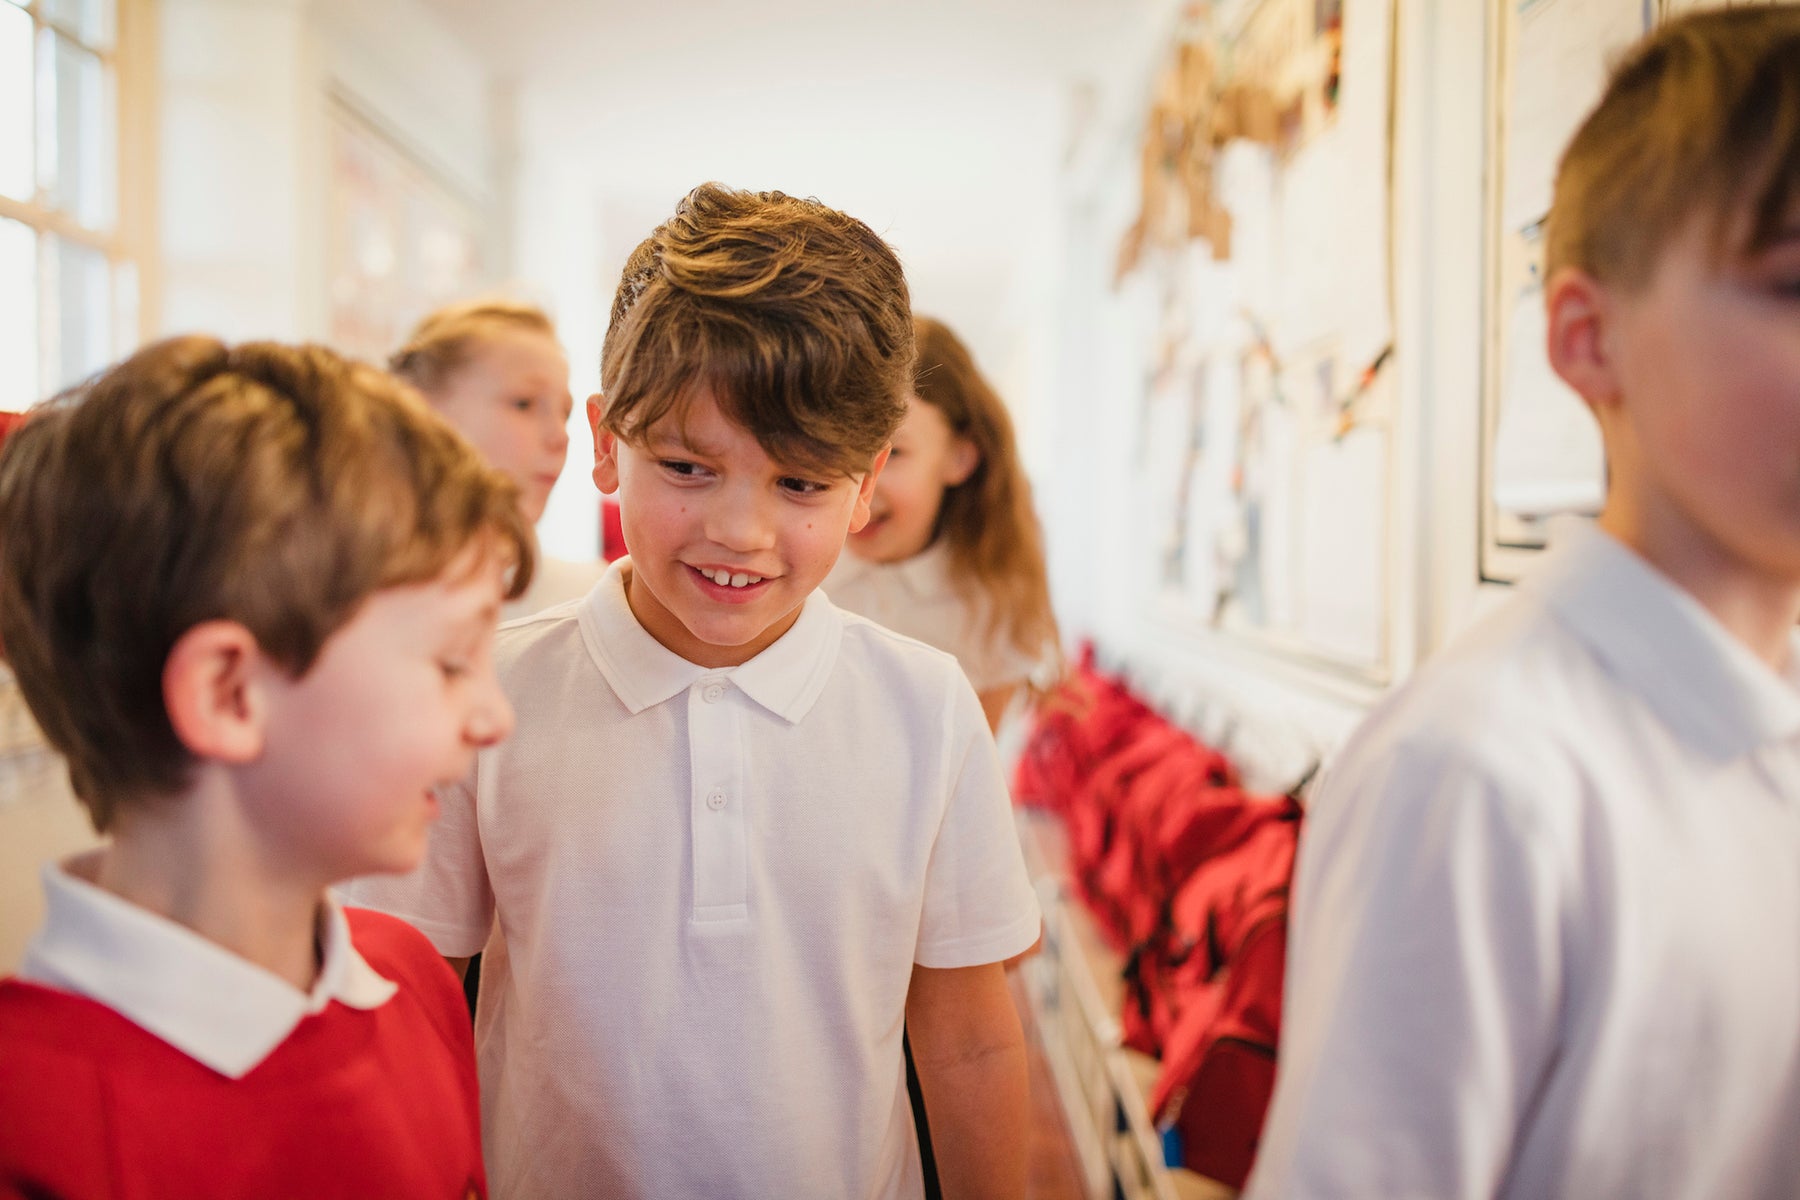 What Makes a Good Friend primary school children in a school hallway